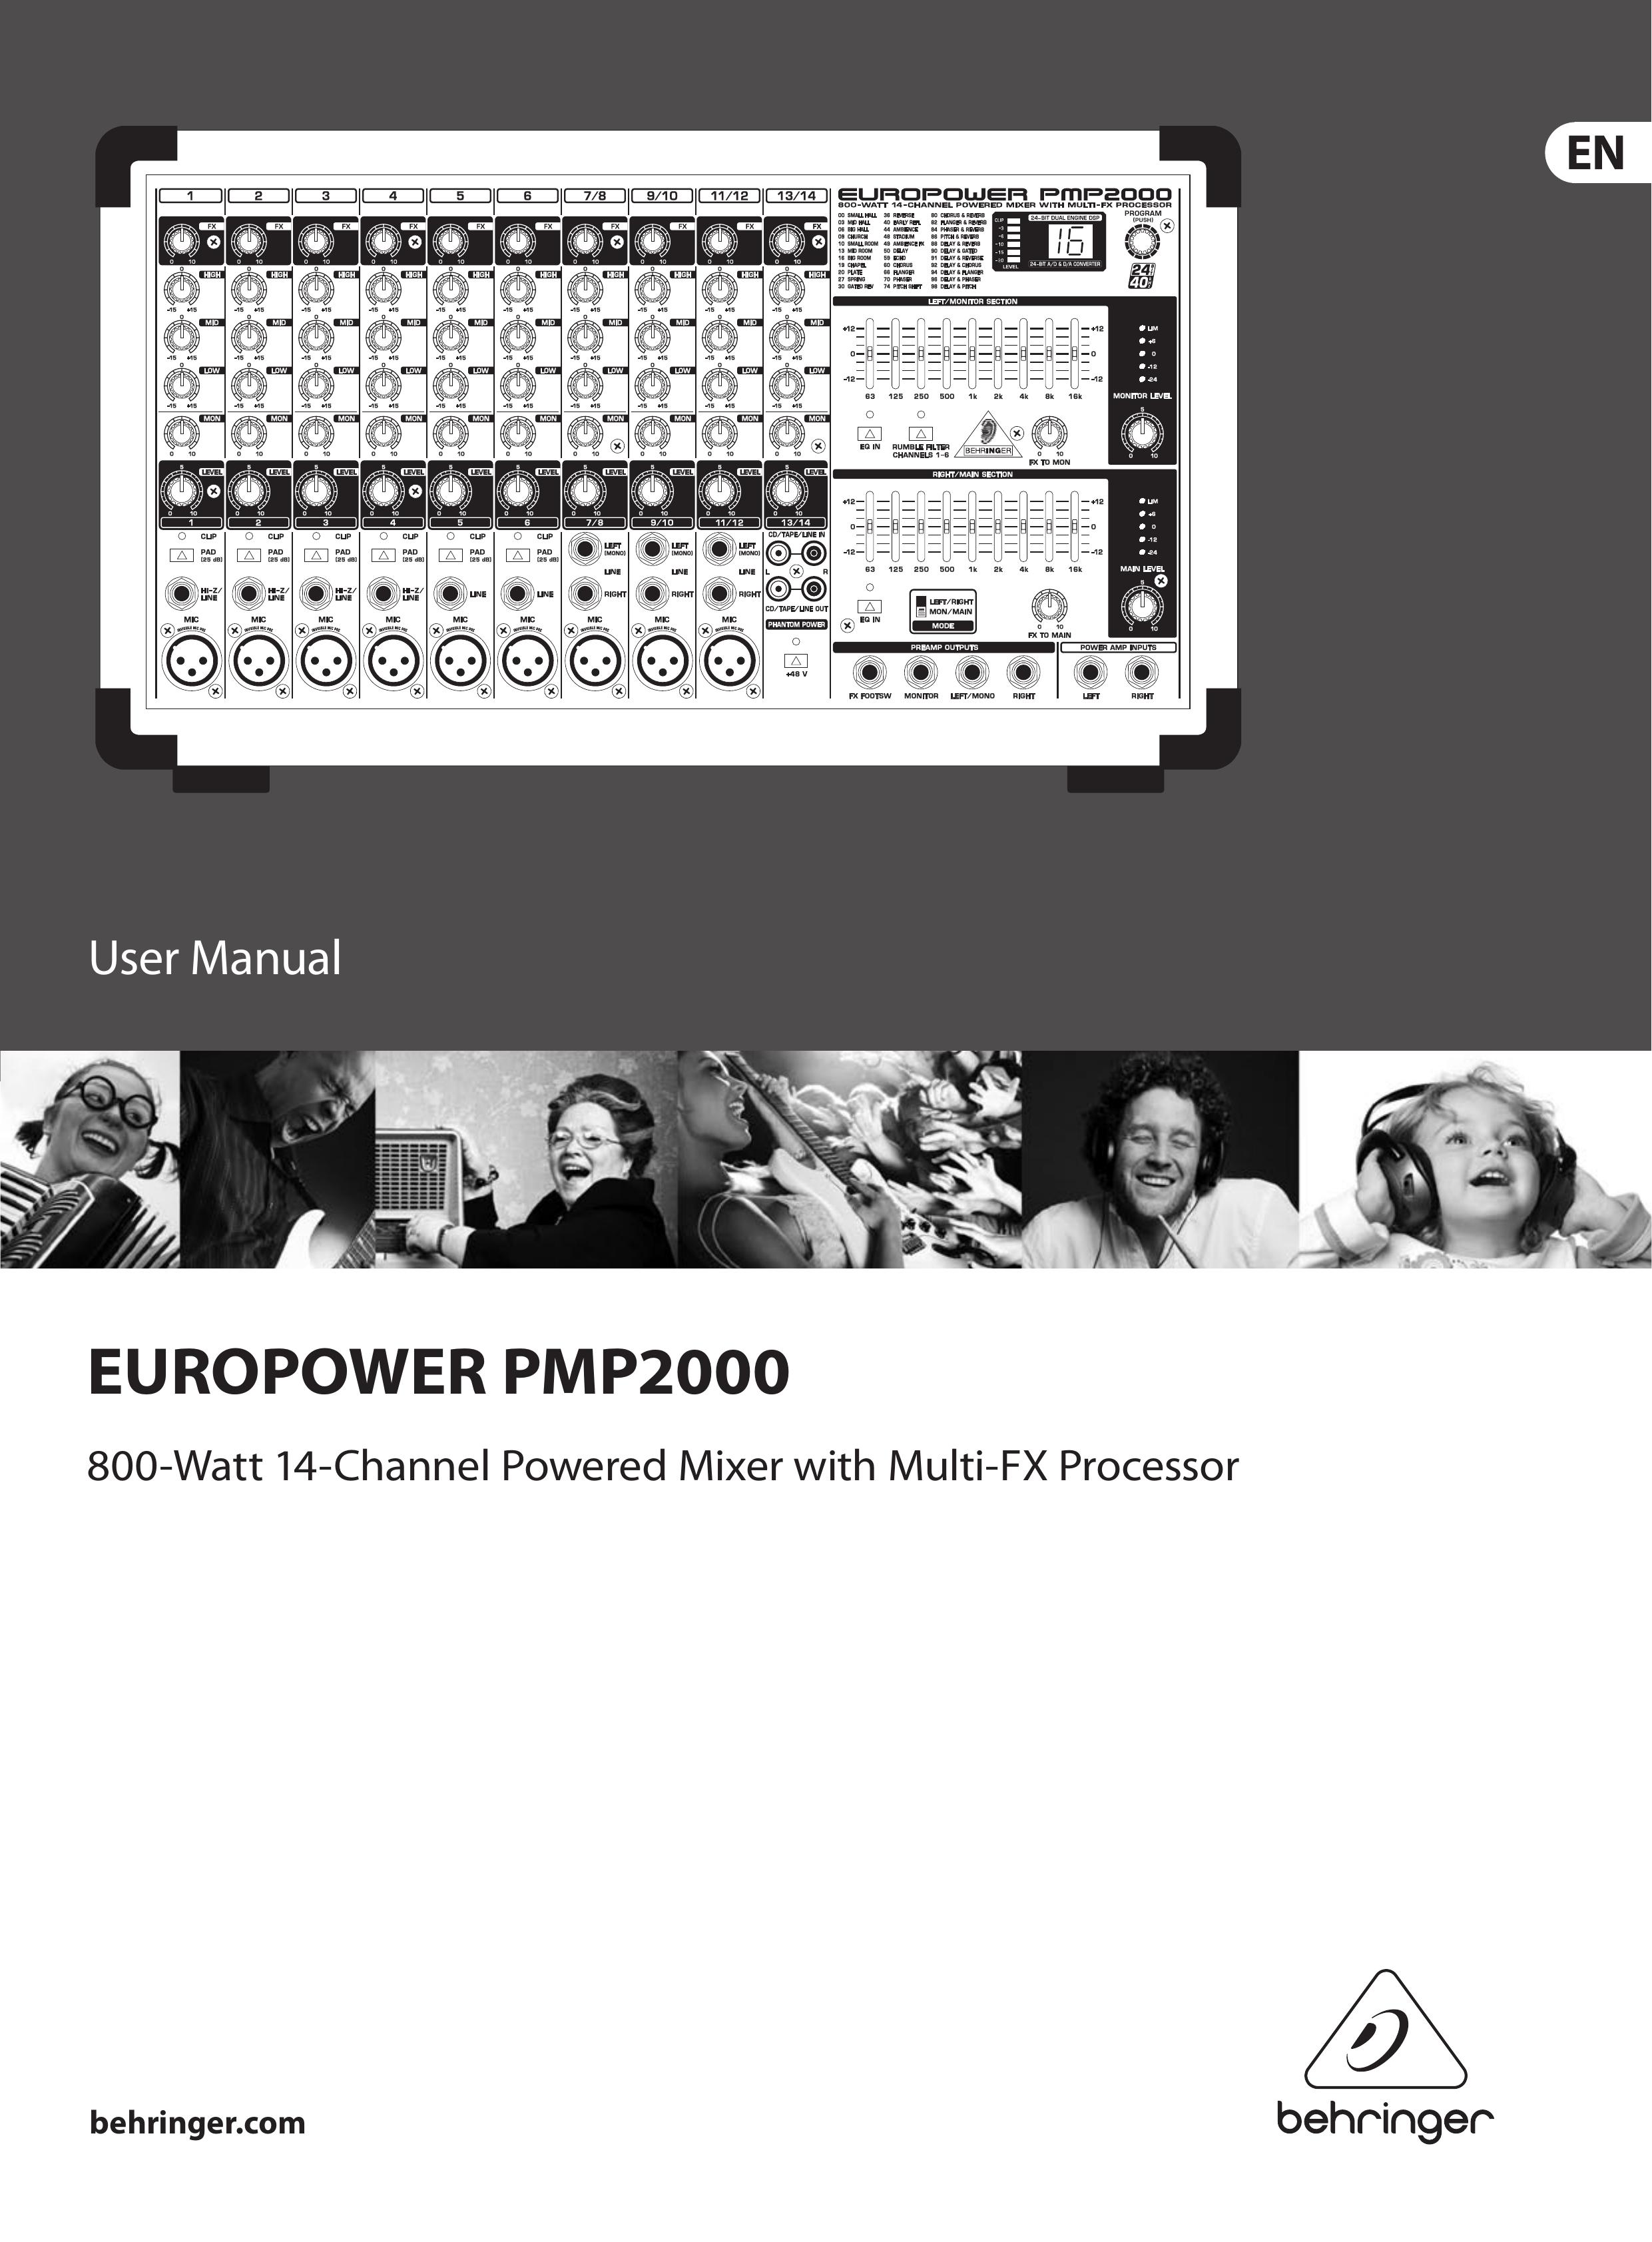 Behringer PMP2000 Music Mixer User Manual